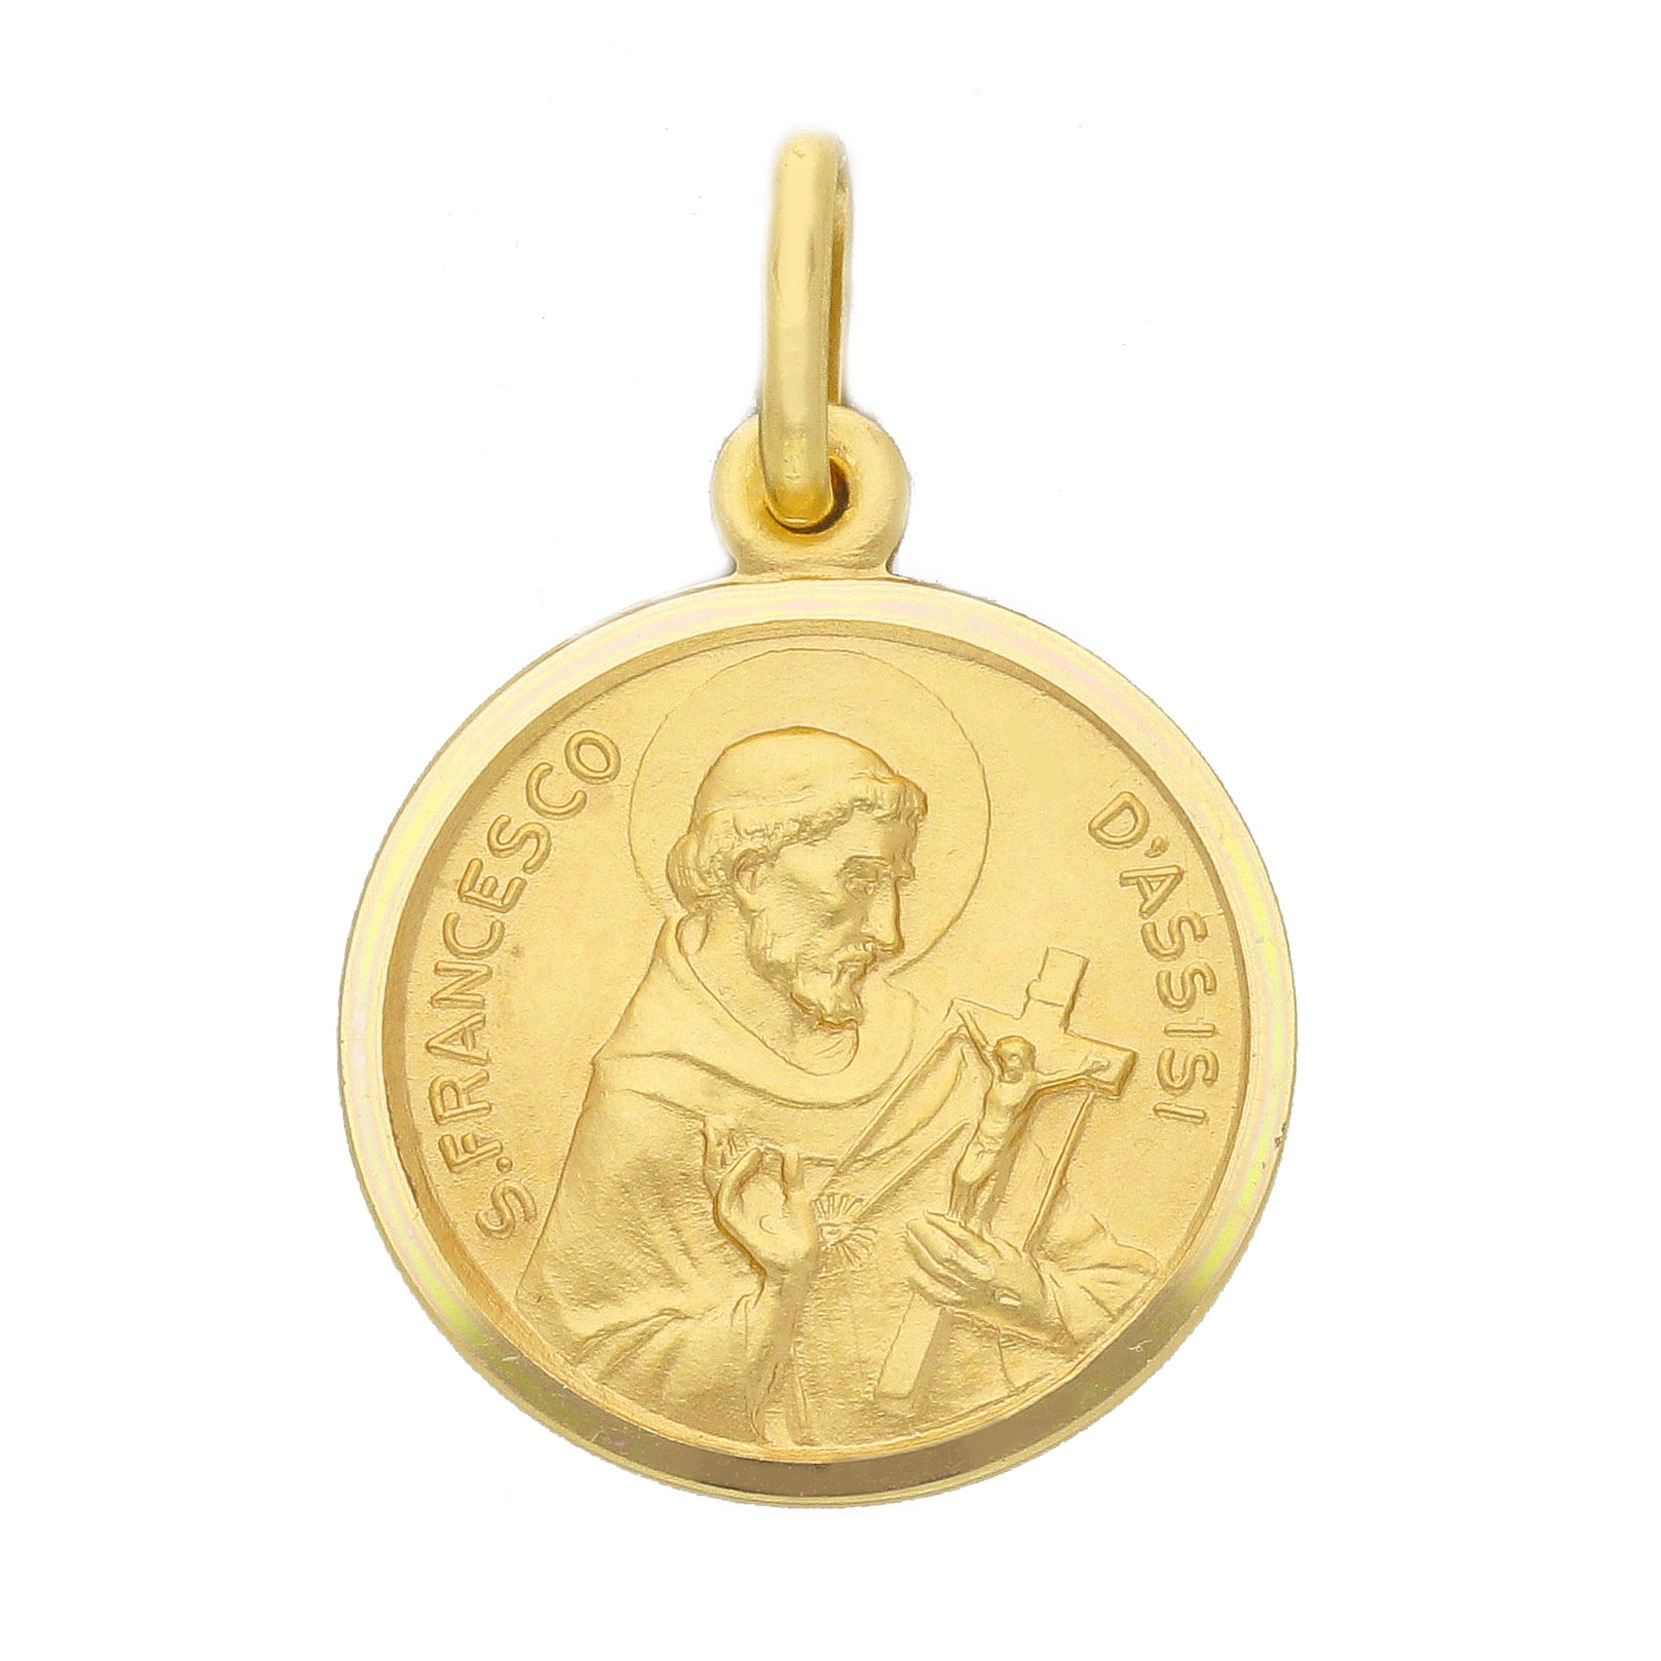 San Francesco from Assisi Medal